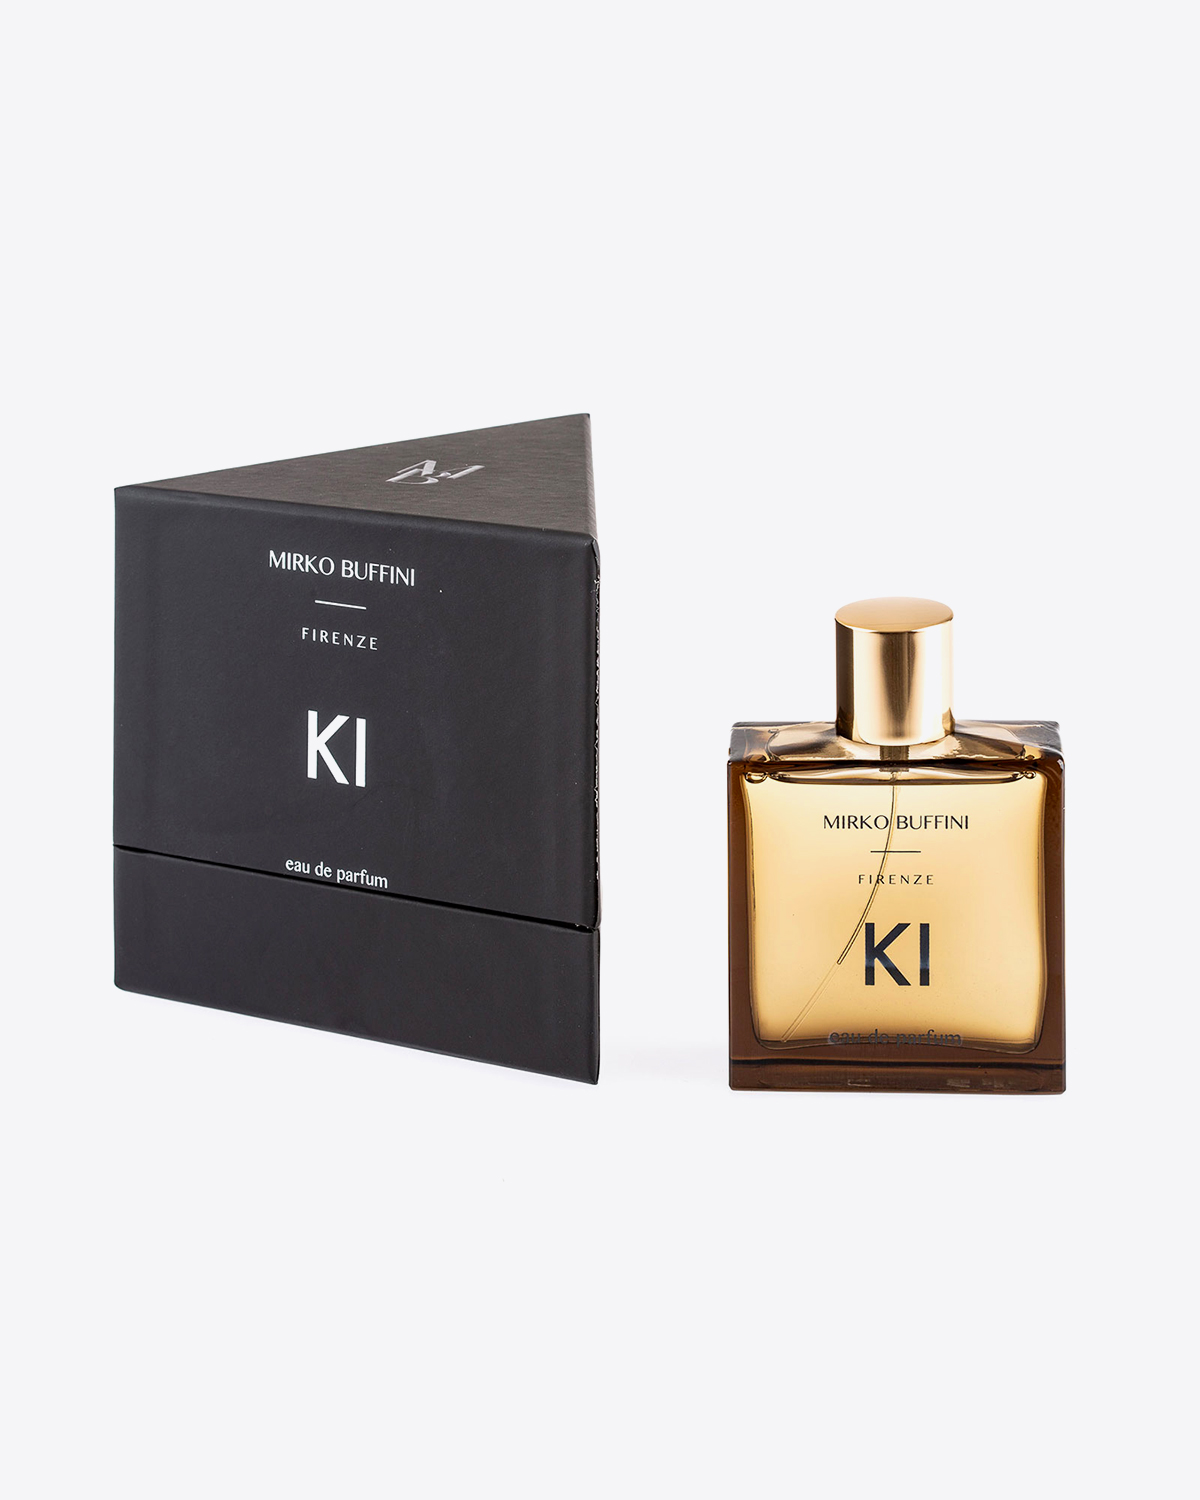 Parfum Ki Mirko Buffini. Flacon de 30 ml vendu dans sa boite triangulaire noire. Collection Balck.